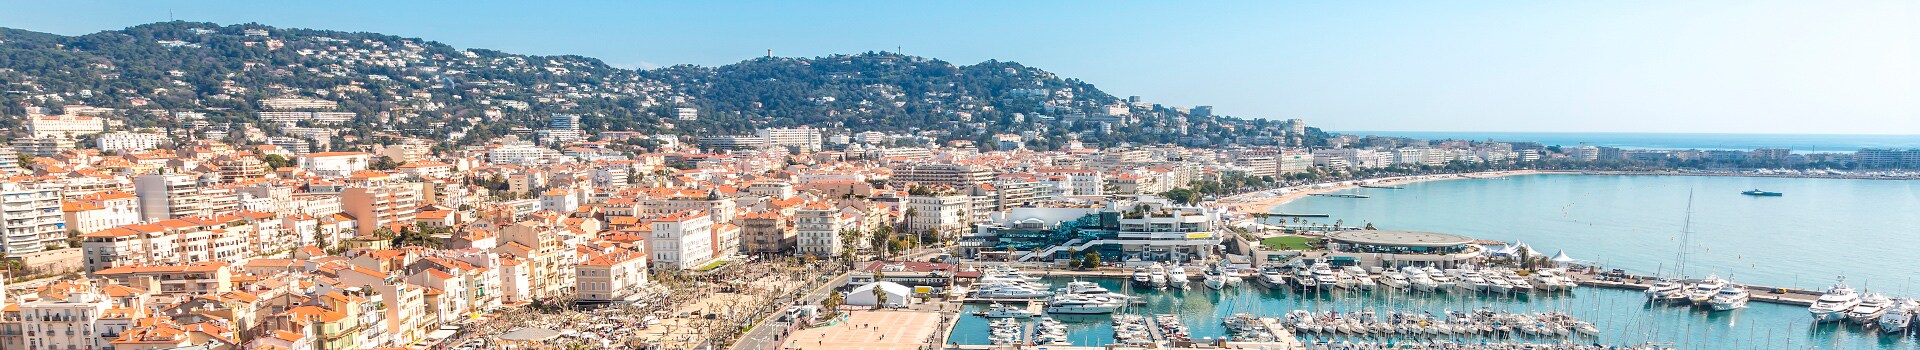 Cannes-Mandelieu